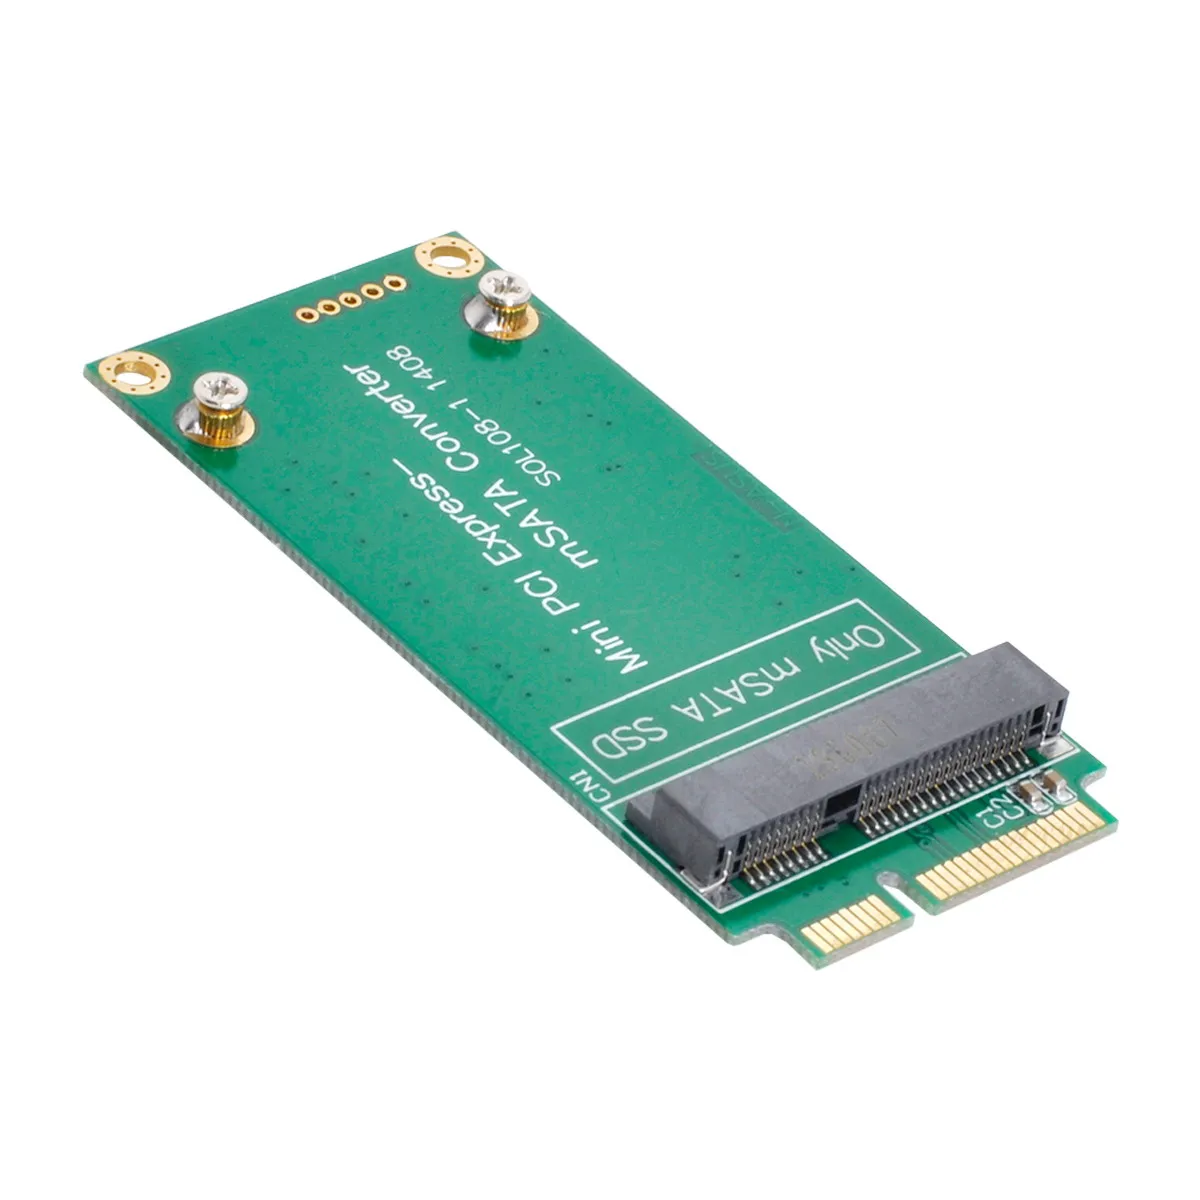 

Переходник Chenyang mSATA, Mini PCI-e, SATA SSD, 3x5 см/3x7 см, для Asus Eee PC 1000, S101, 900, 901, 900A, T91